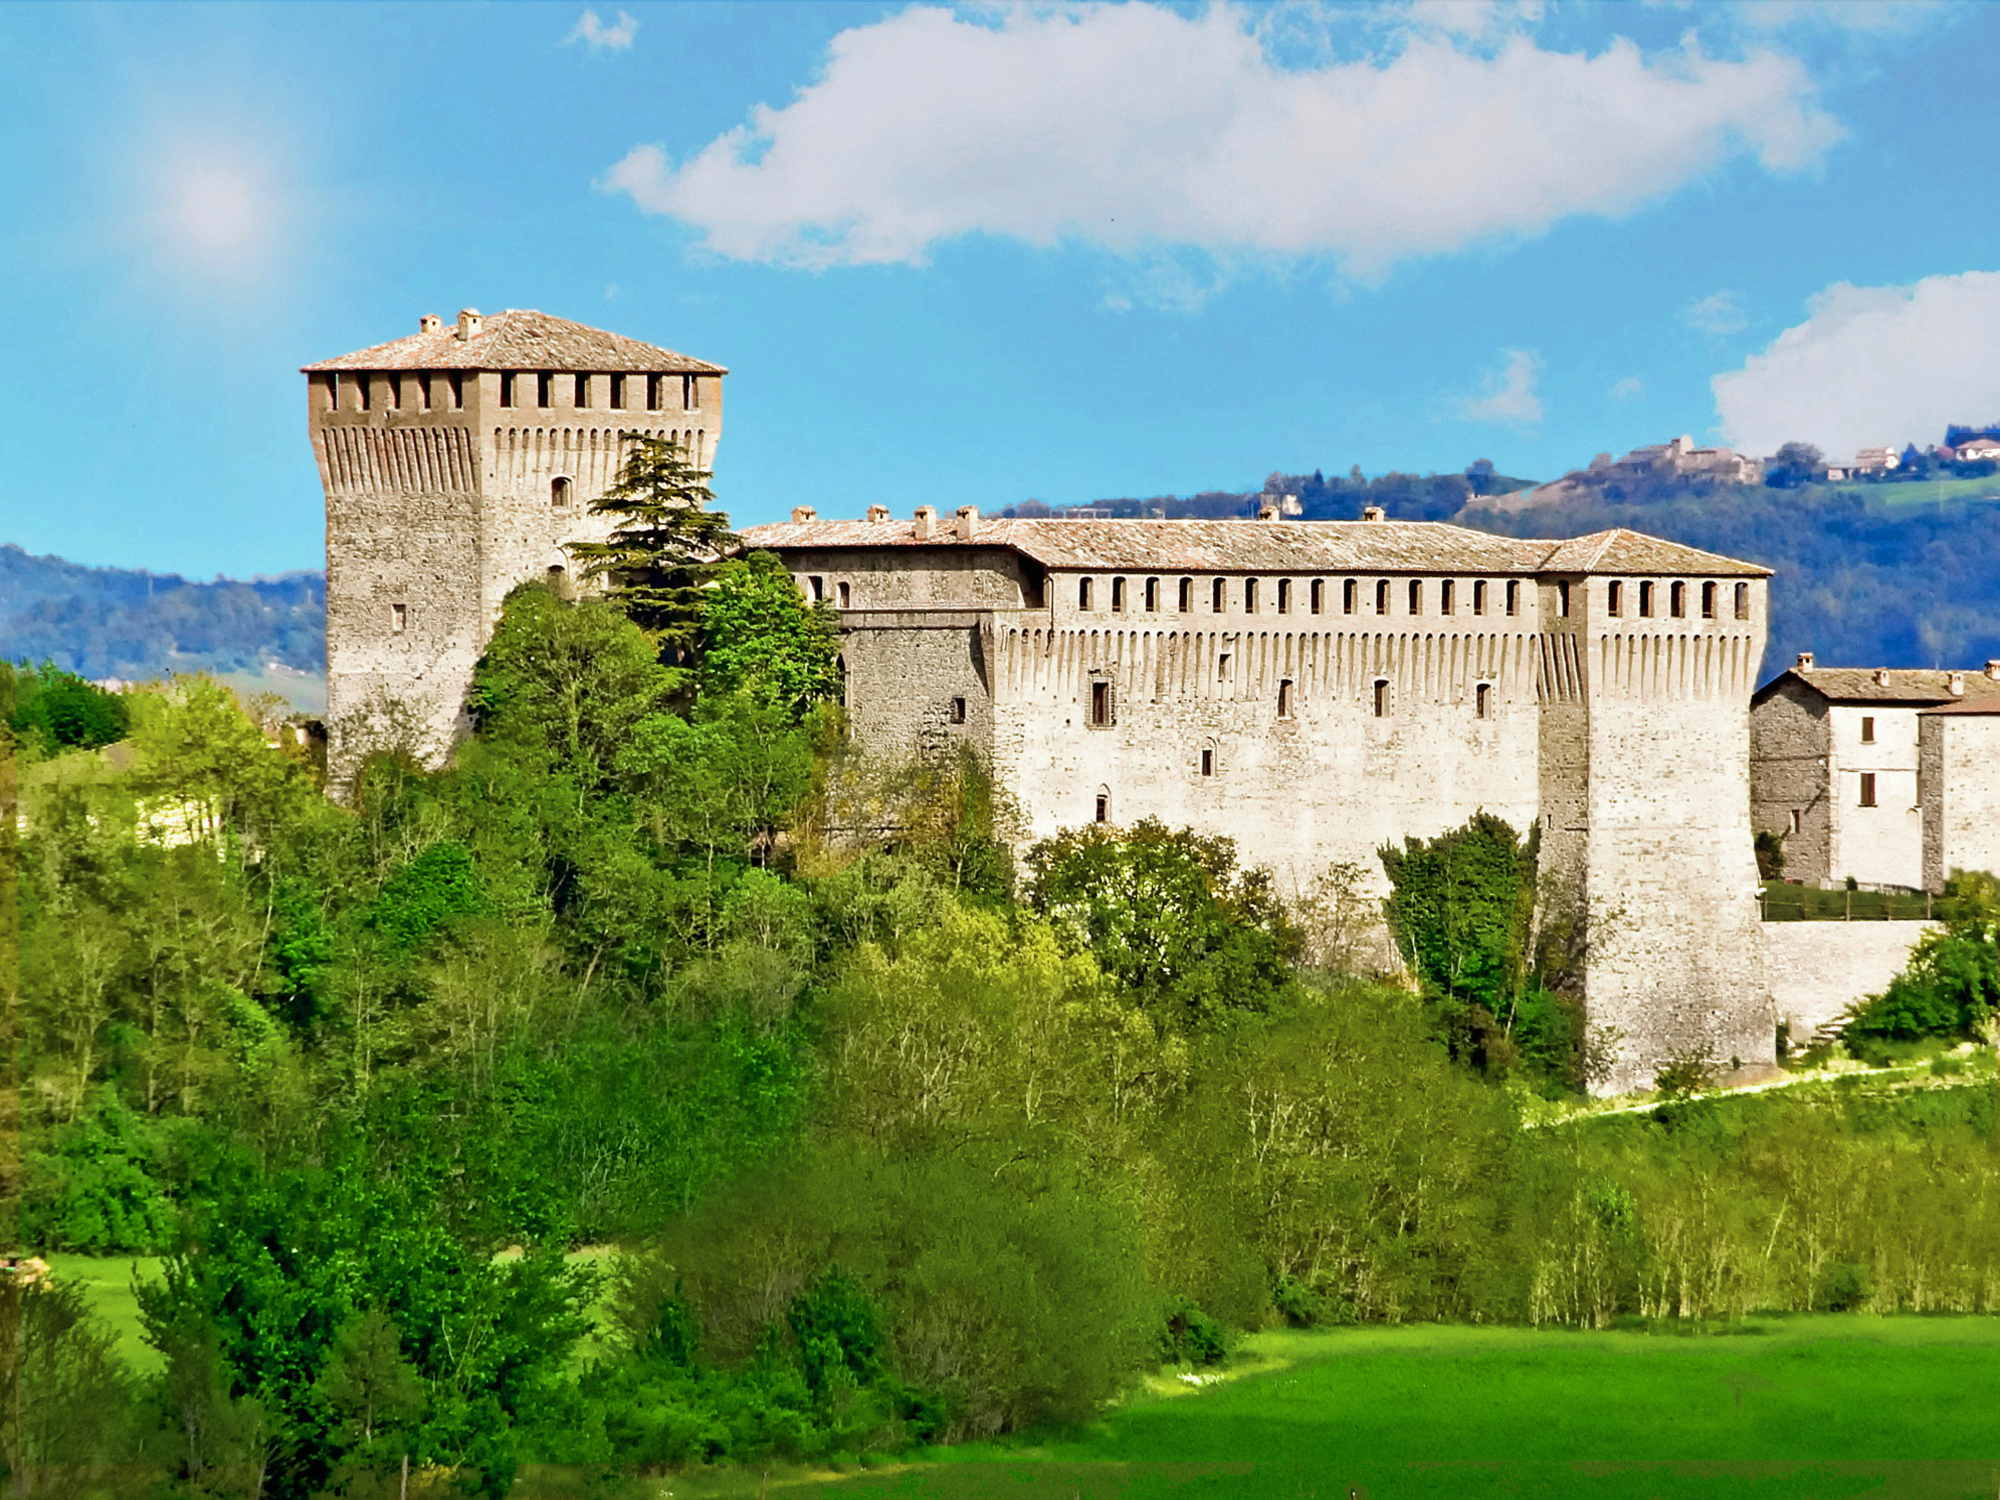 photo: 02 - Castello di Varano - Panoramica.jpg